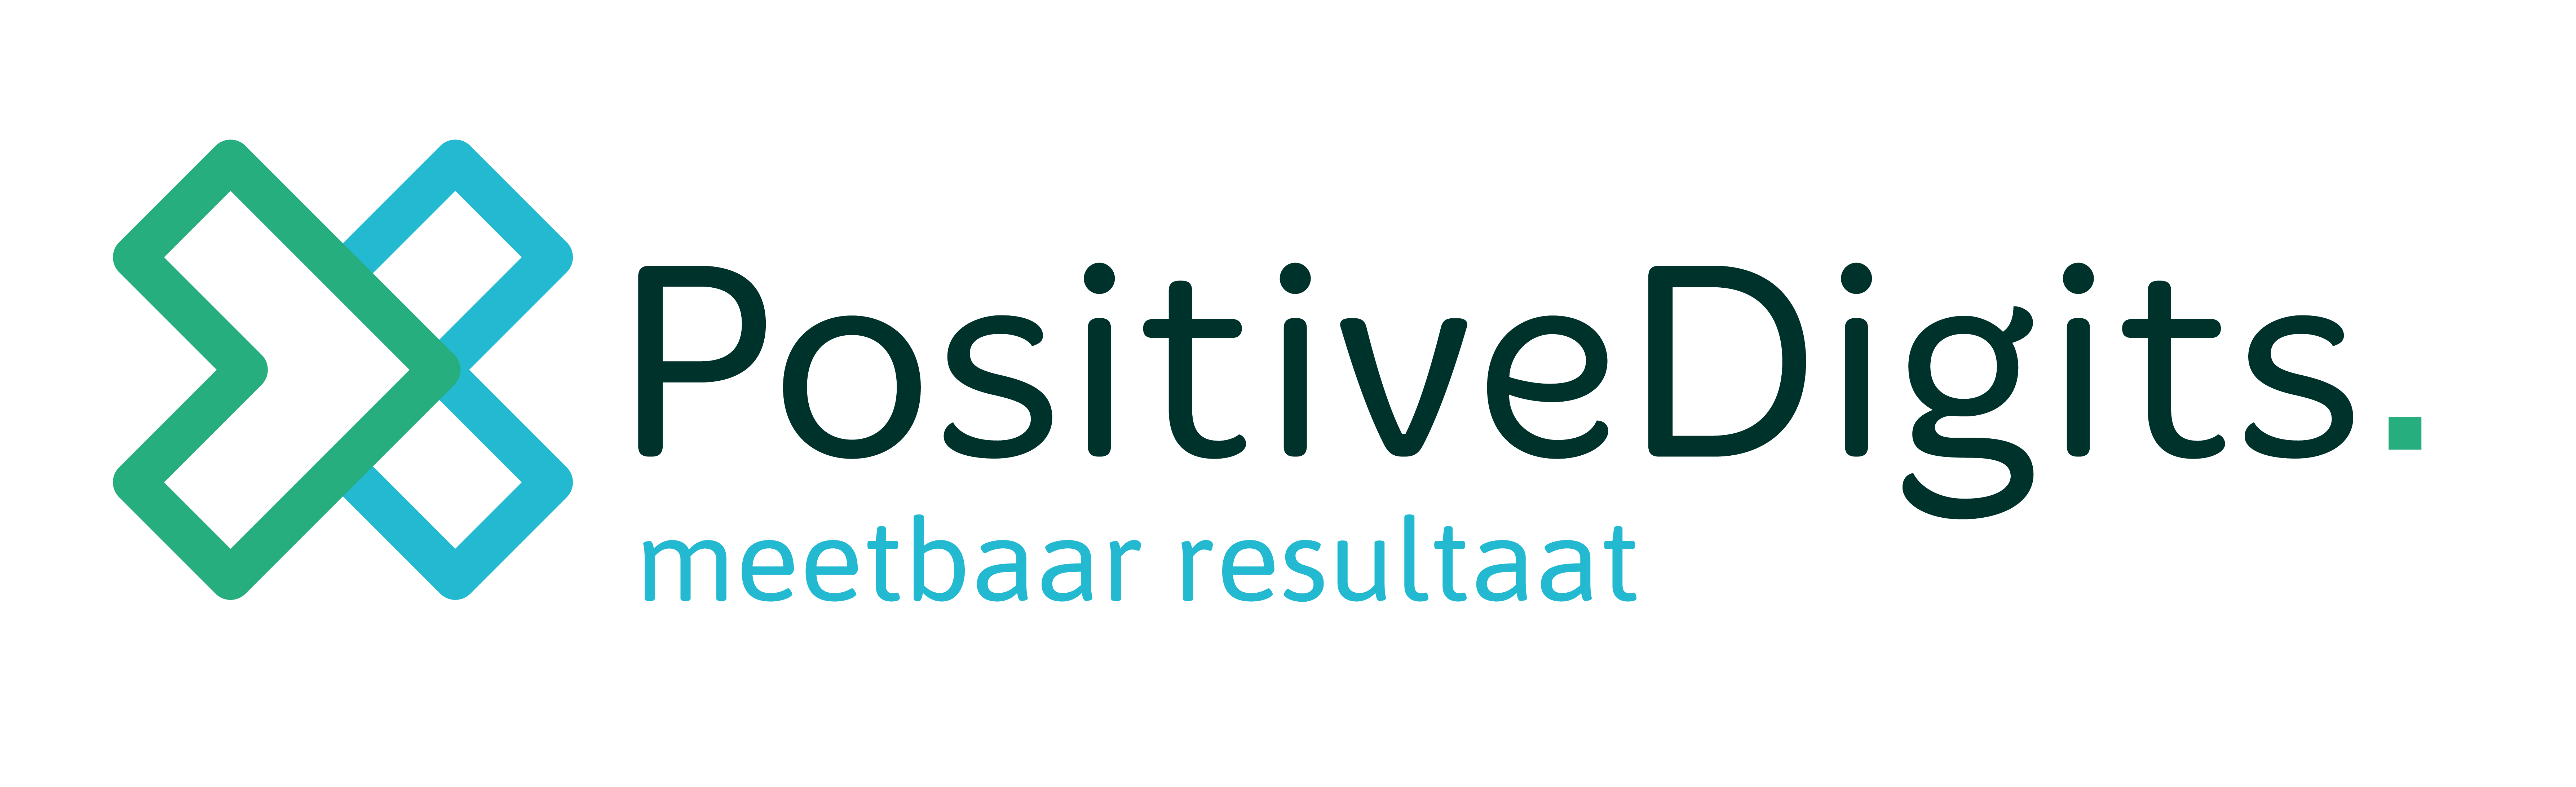 Positive Digits logo